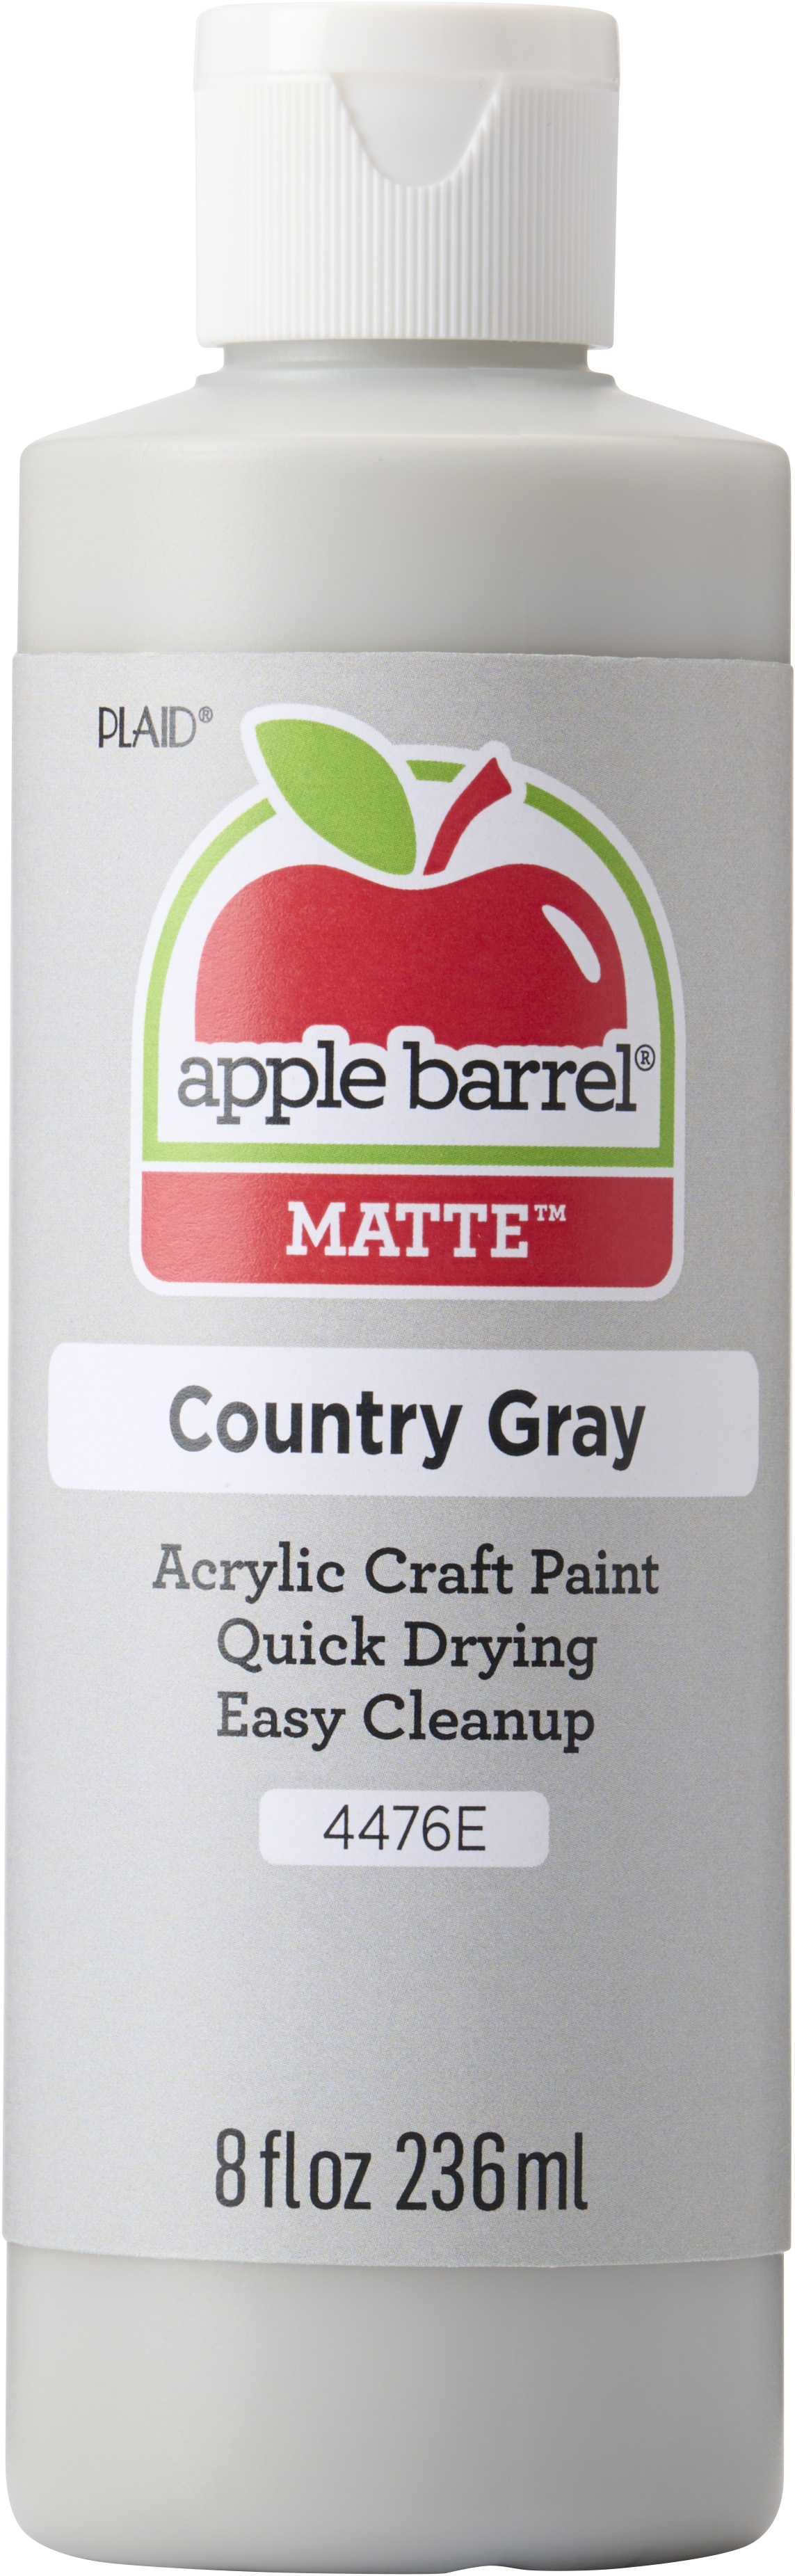 Apple Barrel Original Acrylic Paints: Unleash Your Creative Potential